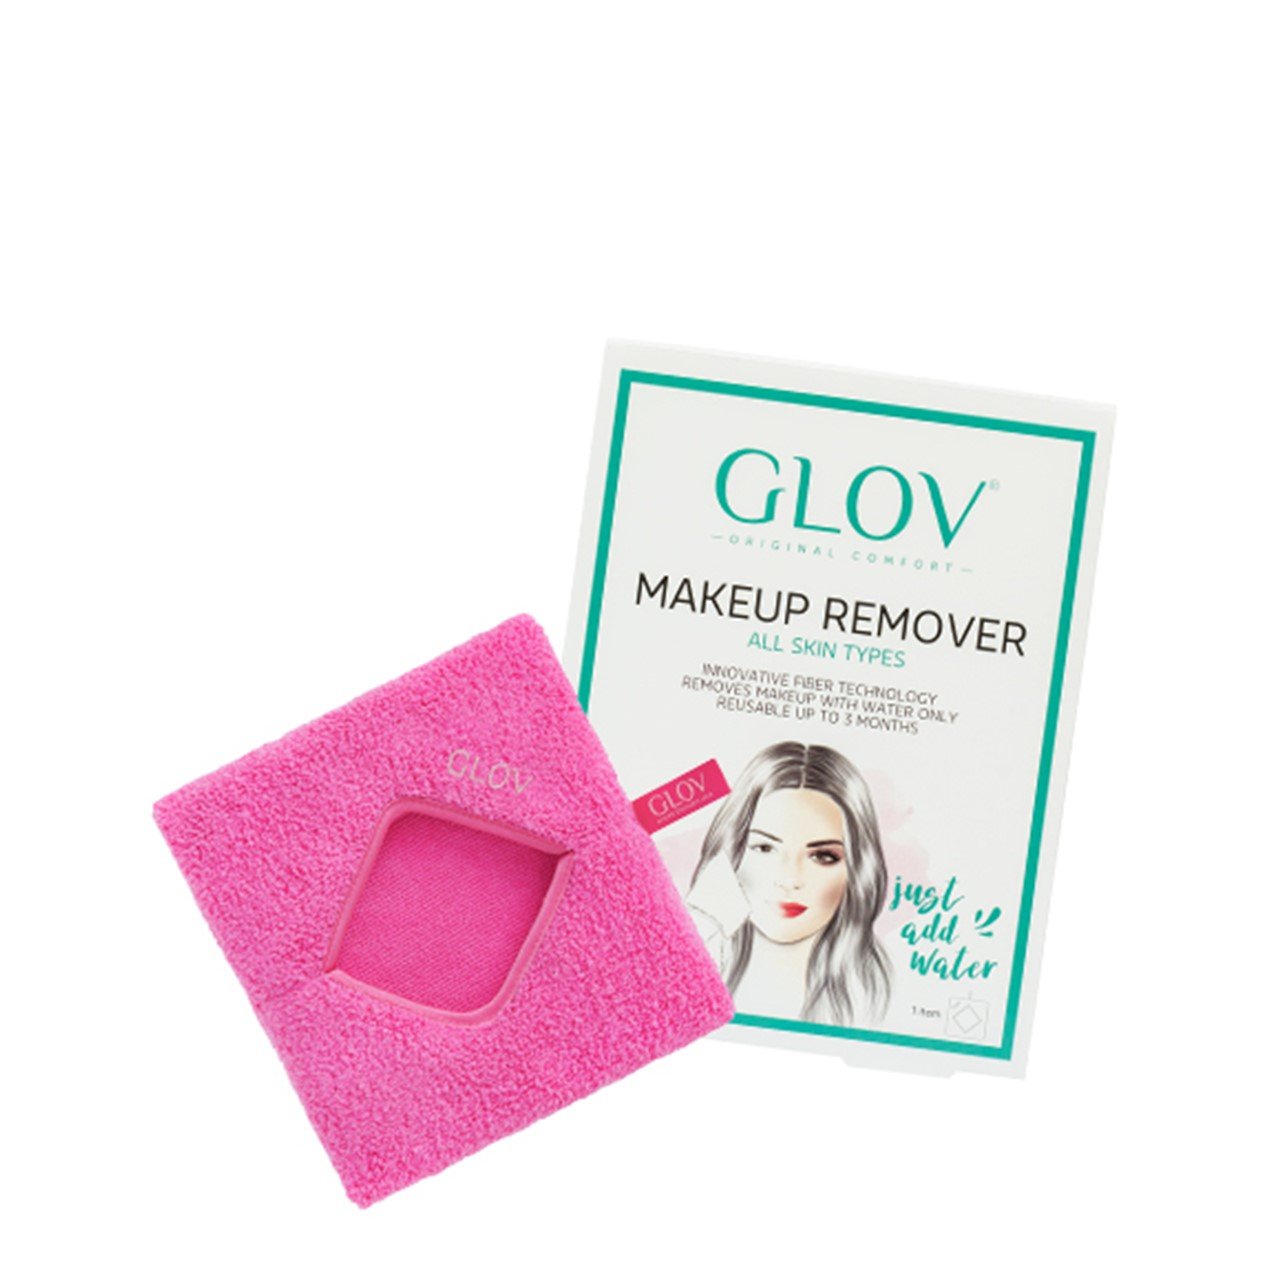 GLOV Comfort Makeup Remover Glove Party Pink